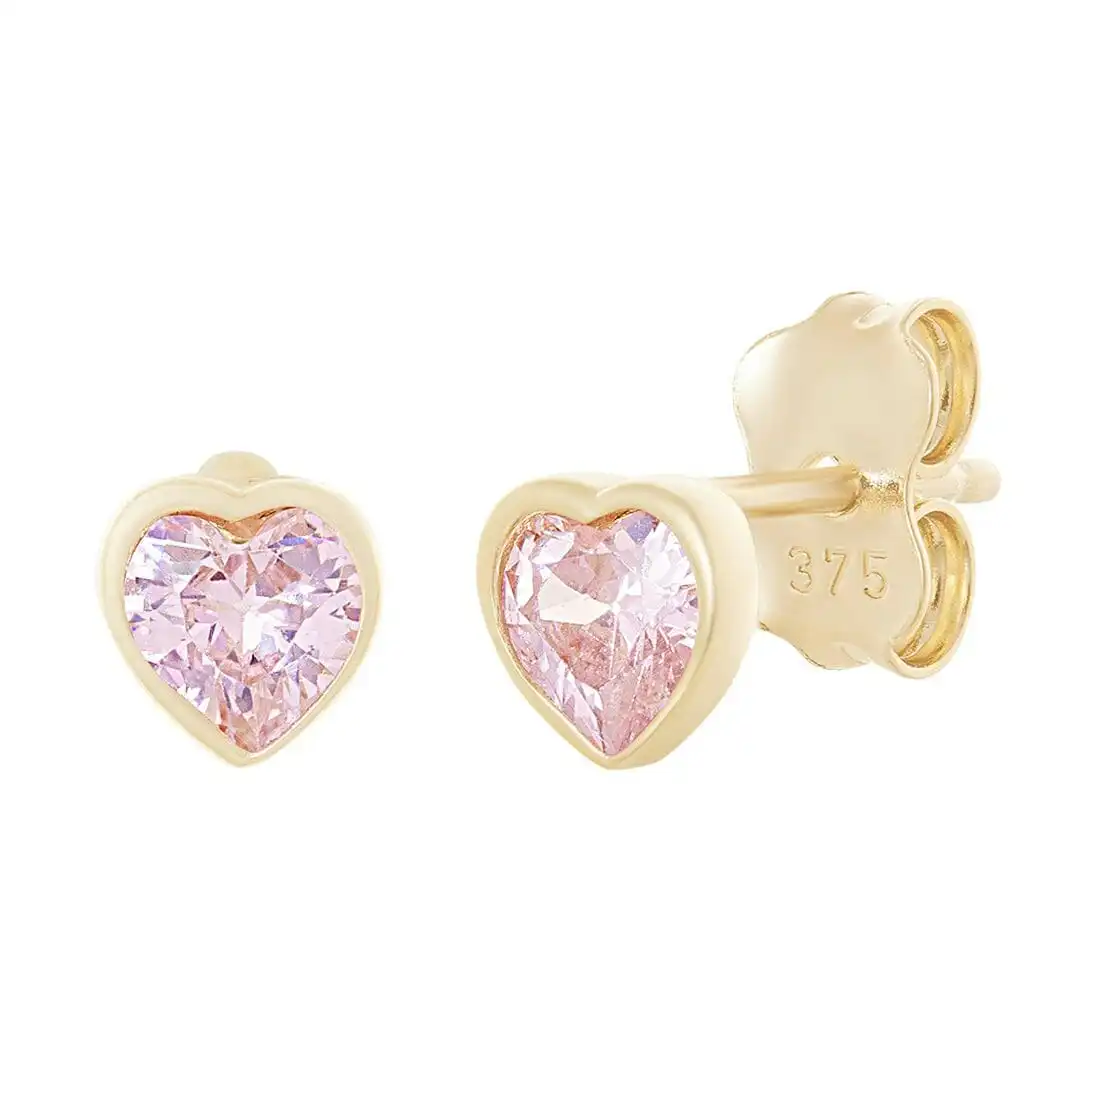 Pink Cubic Zirconia Heart Stud Earrings in 9ct Yellow Gold